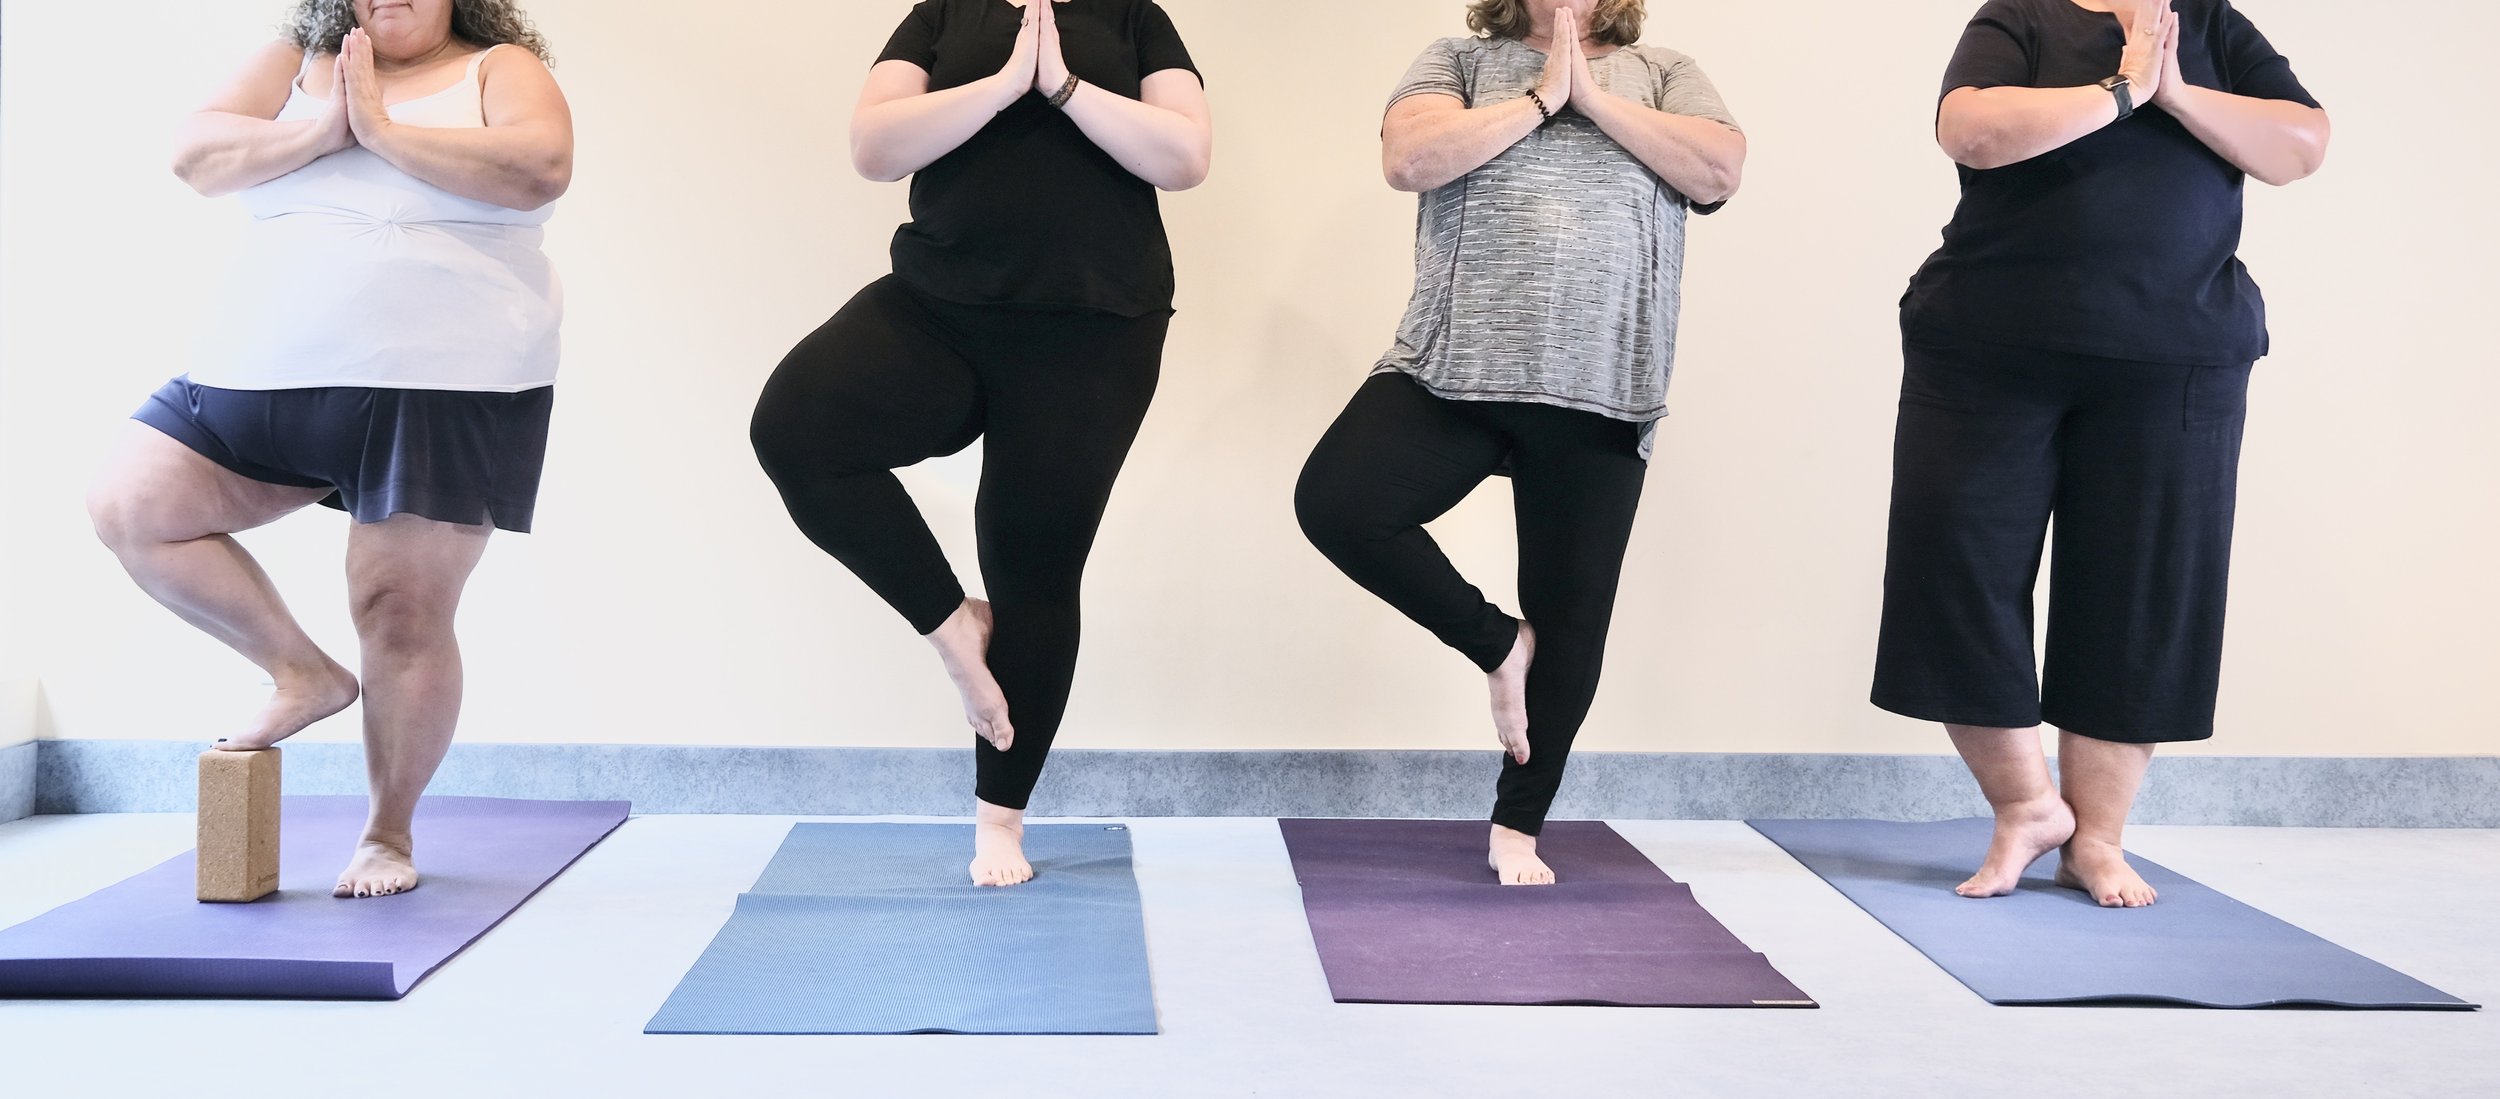 Plus-size yoga — The Calgary Yoga Collective